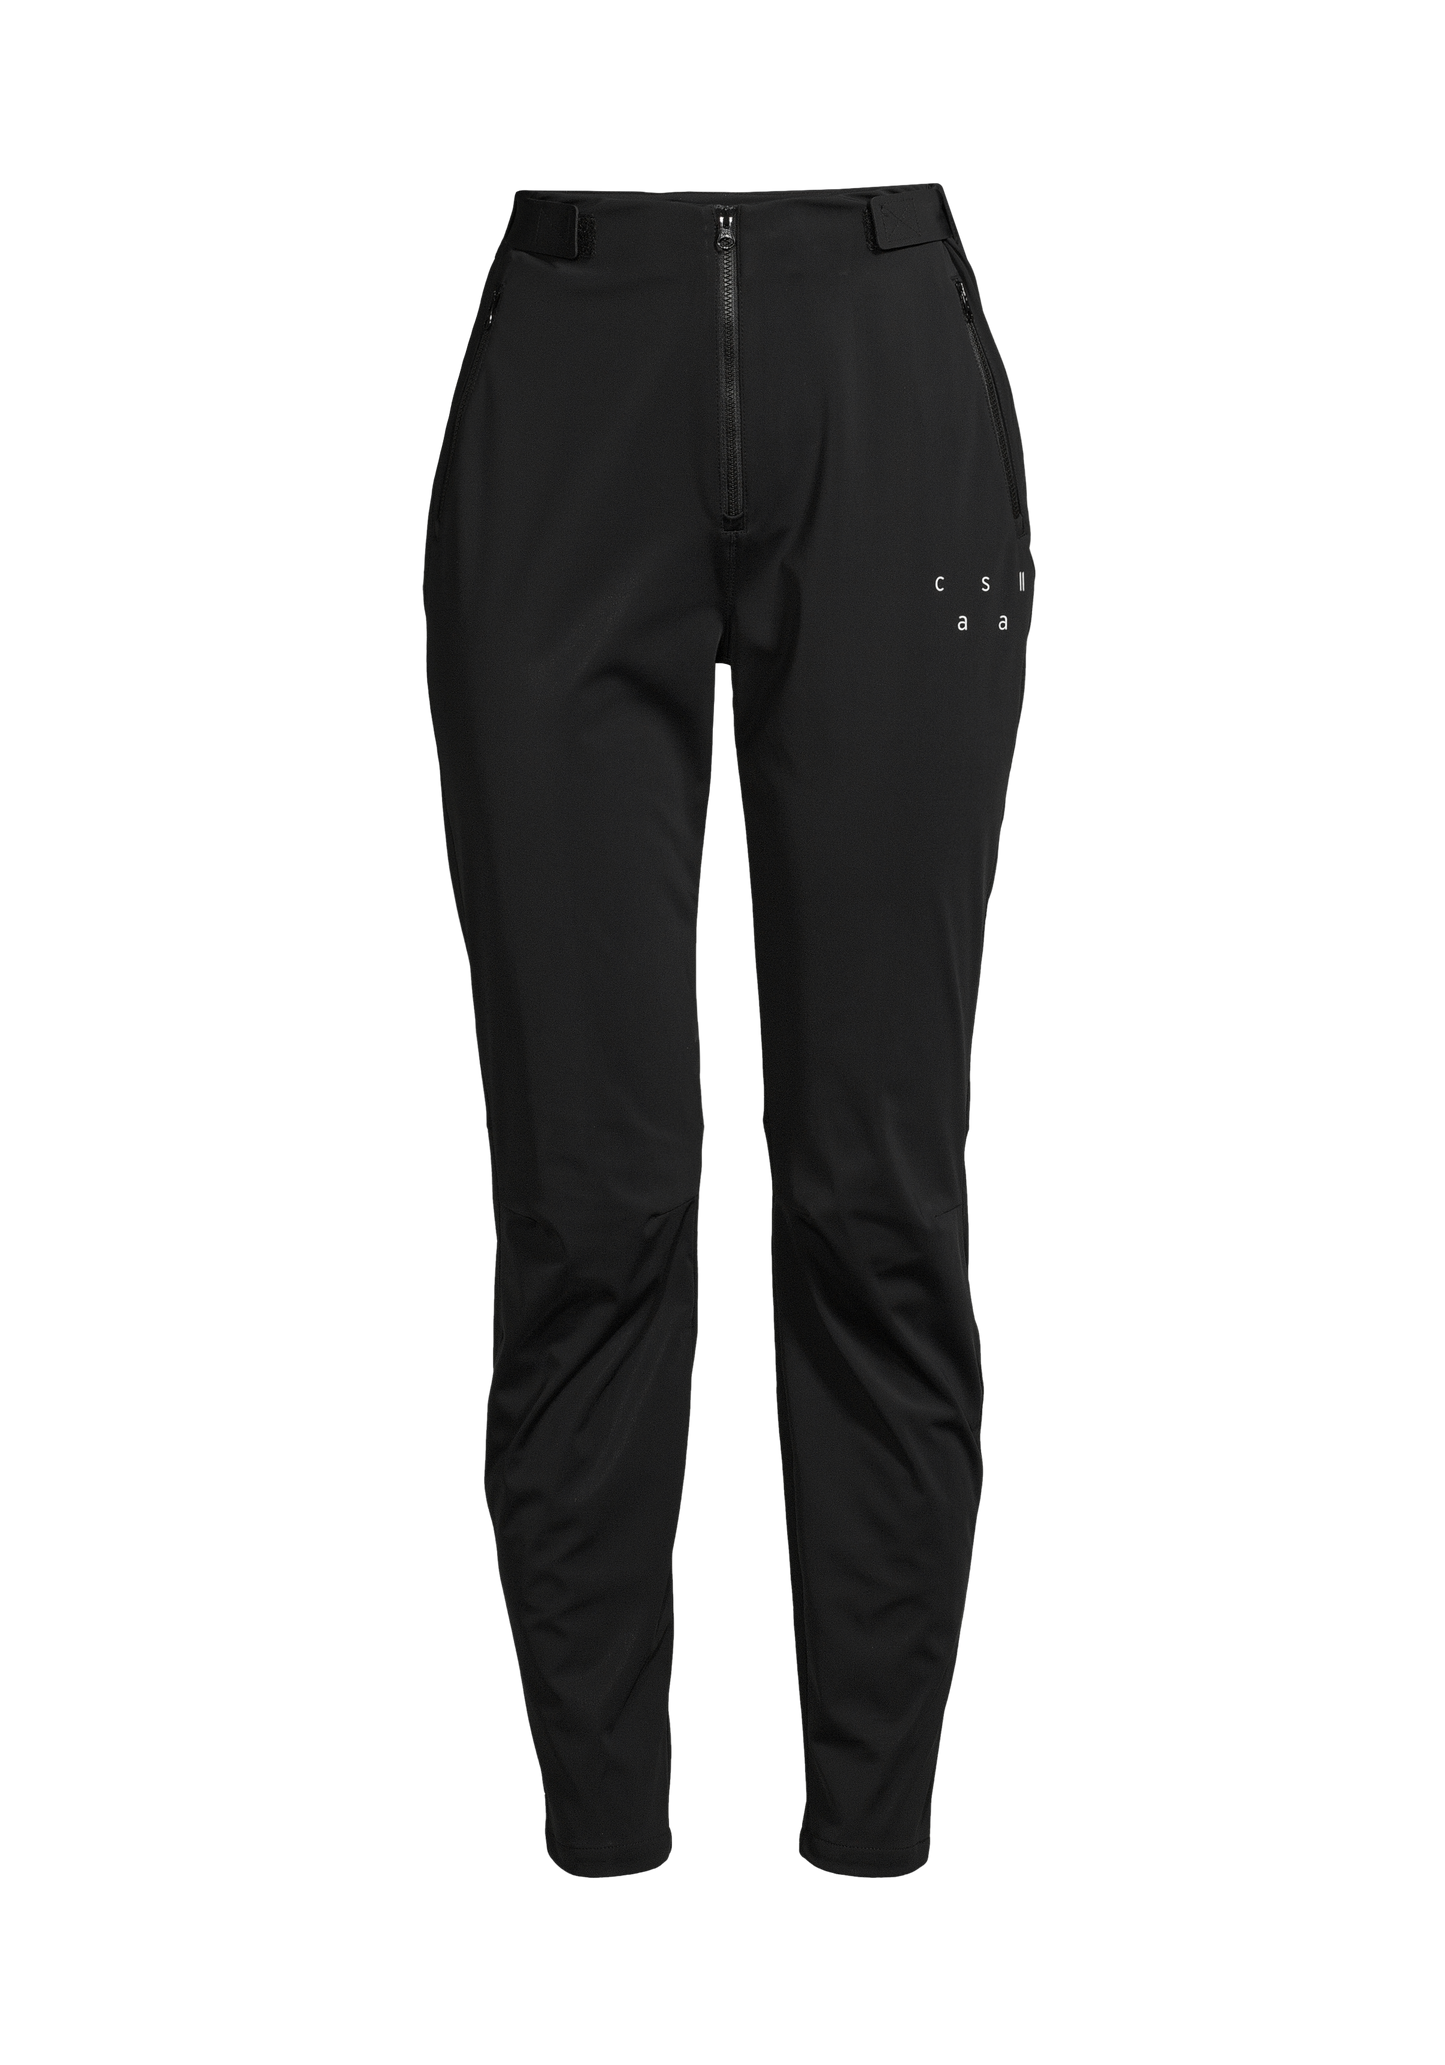 Casall - Urban Outdoor Training Pants - Black (D)